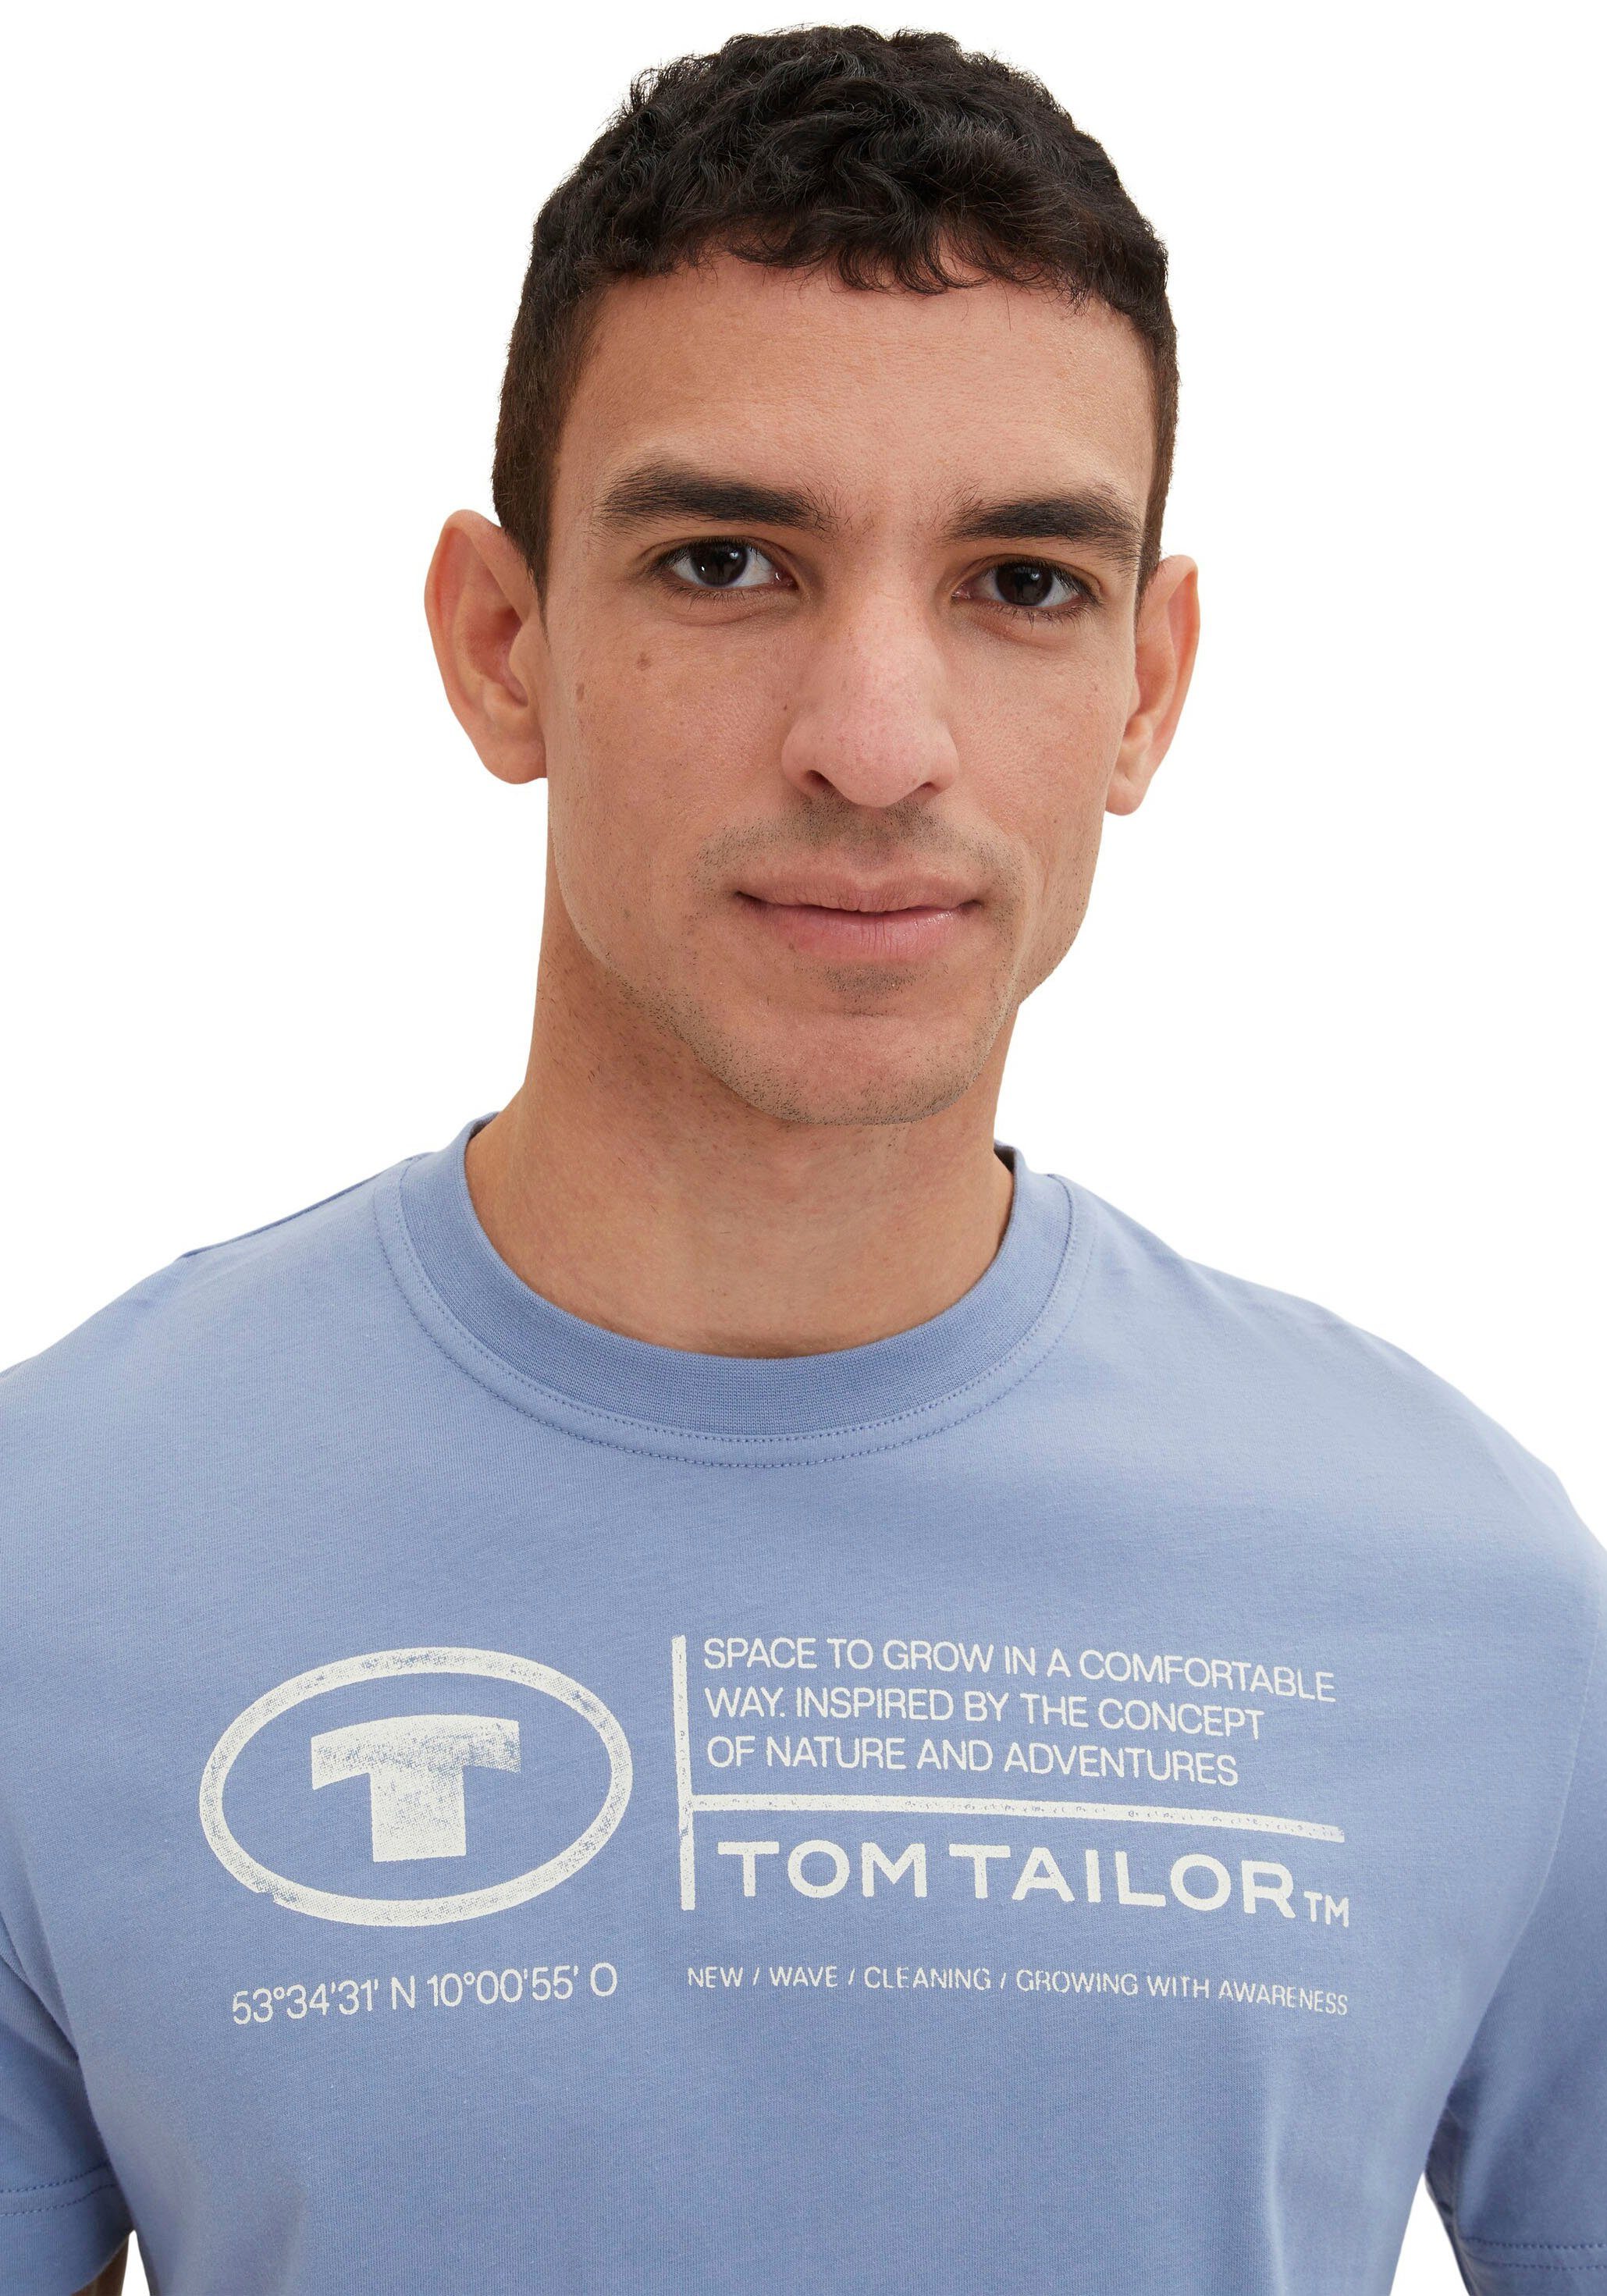 Mid Tailor Greyish Tom TAILOR T-Shirt Herren TOM Frontprint Print-Shirt Blue